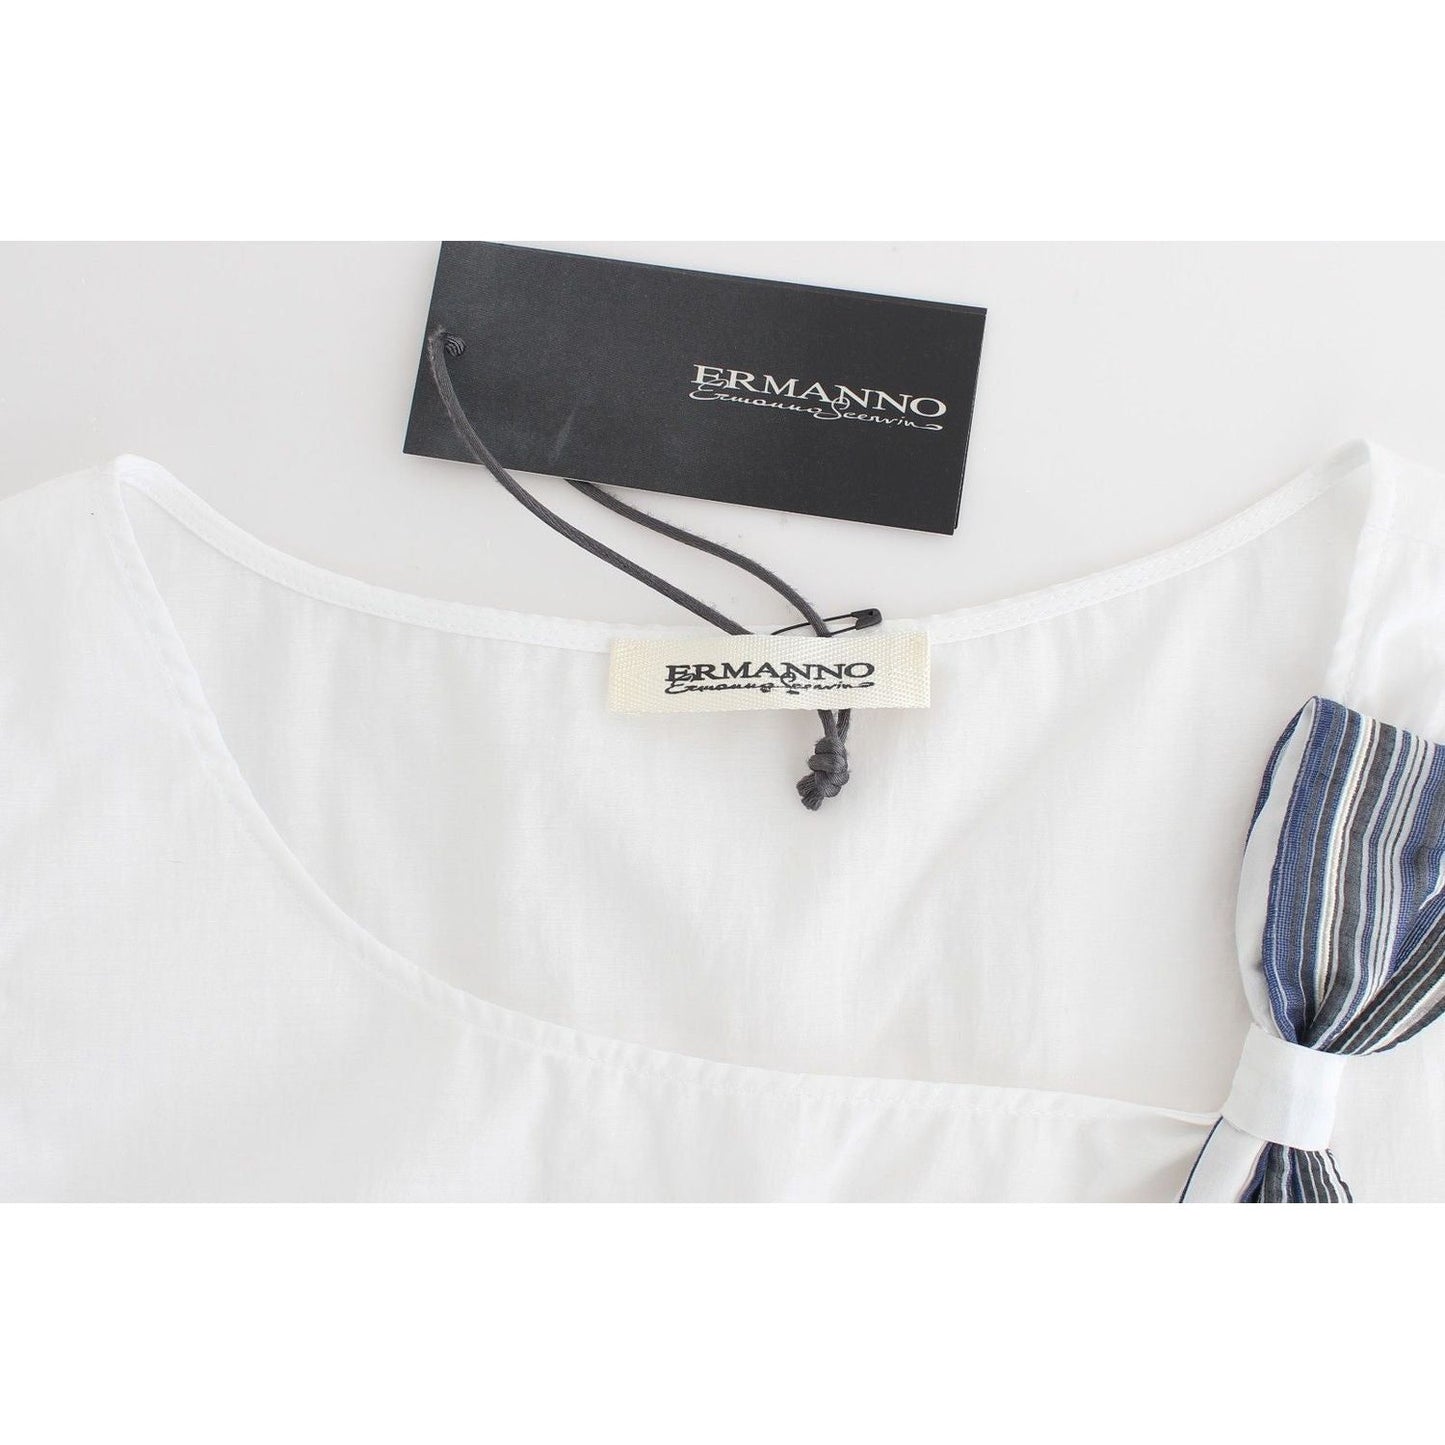 Ermanno Scervino Elegant Cotton-Blend Bow Top white-blue-top-blouse-tank-shirt-sleeveless